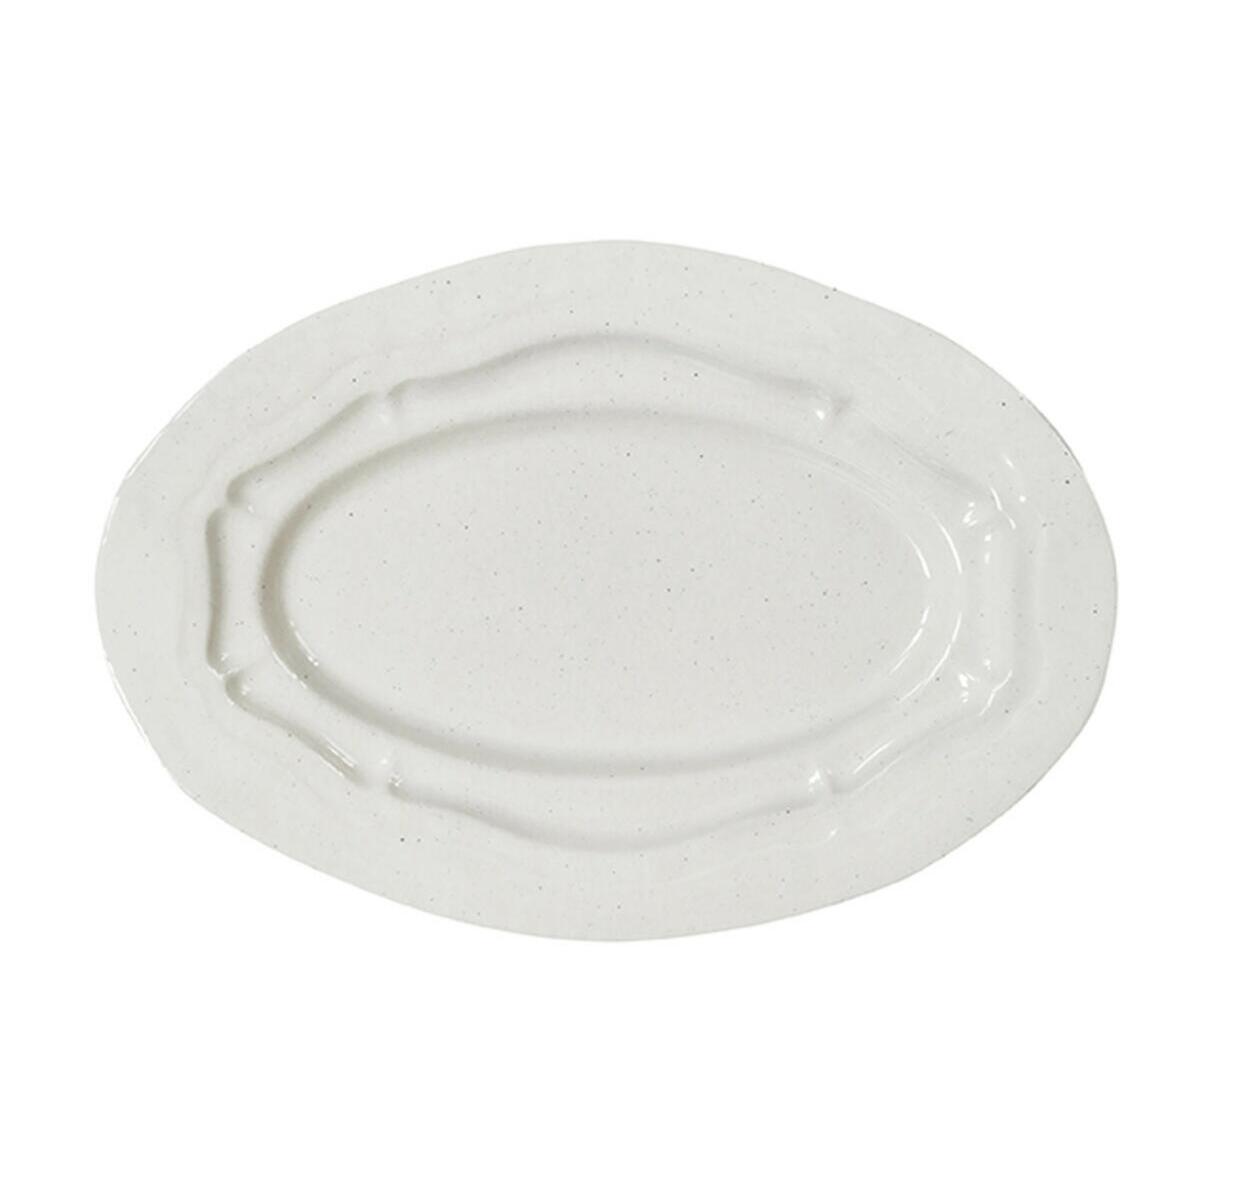 oval dish l refectoire sable brillant ceramic manufacturer